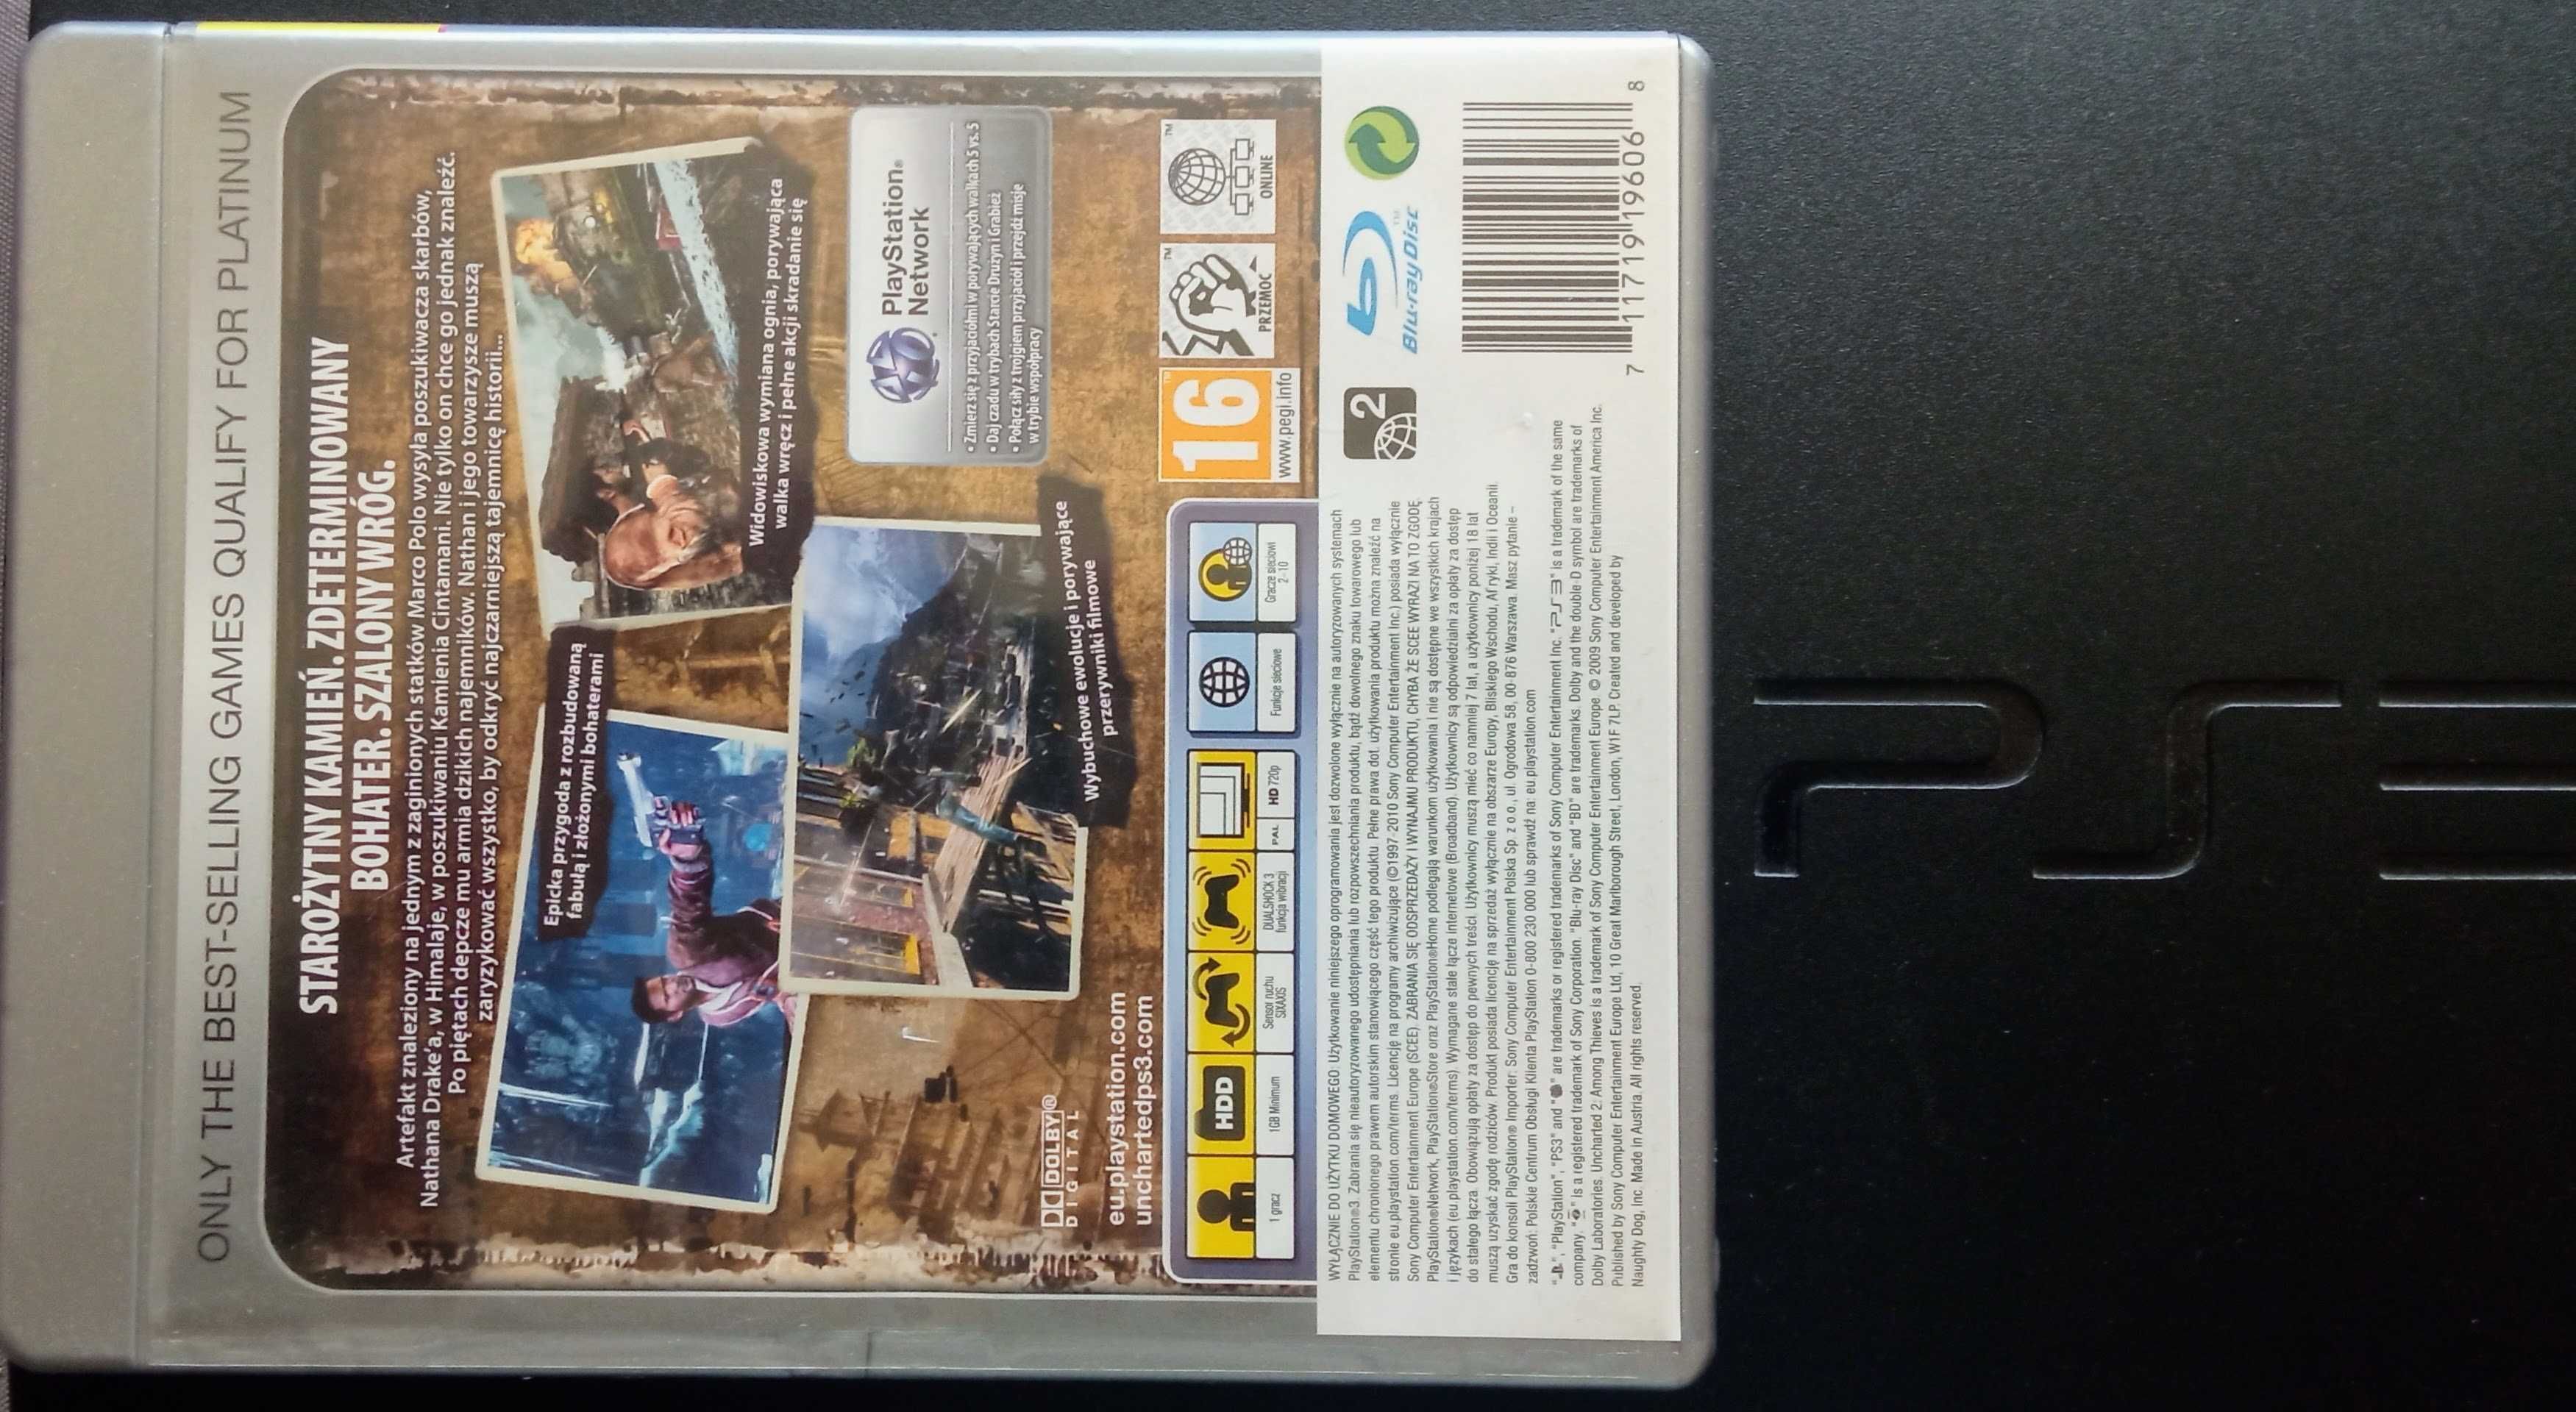 Gra PS3 - Uncharted II - Oryginalne Opakowanie Jak Nowa